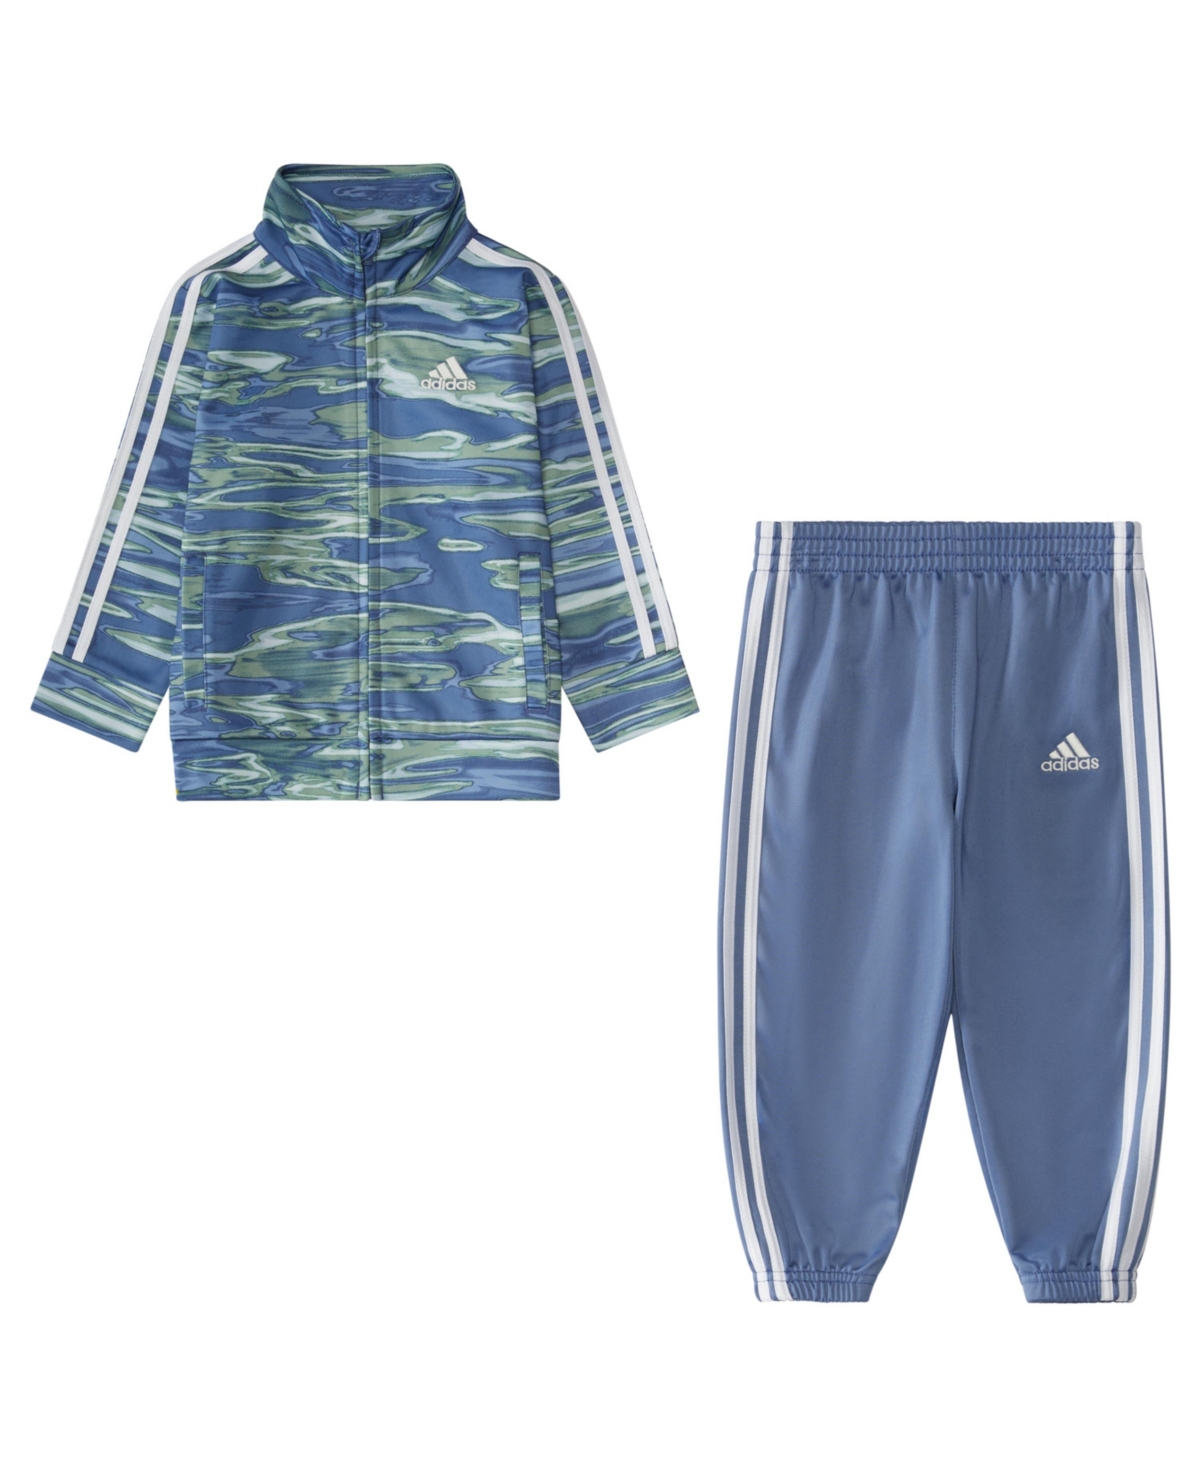 Adidas Originals Baby Boys Long Sleeve Printed Jacket Tricot Set, 2 Piece In Crew Blue